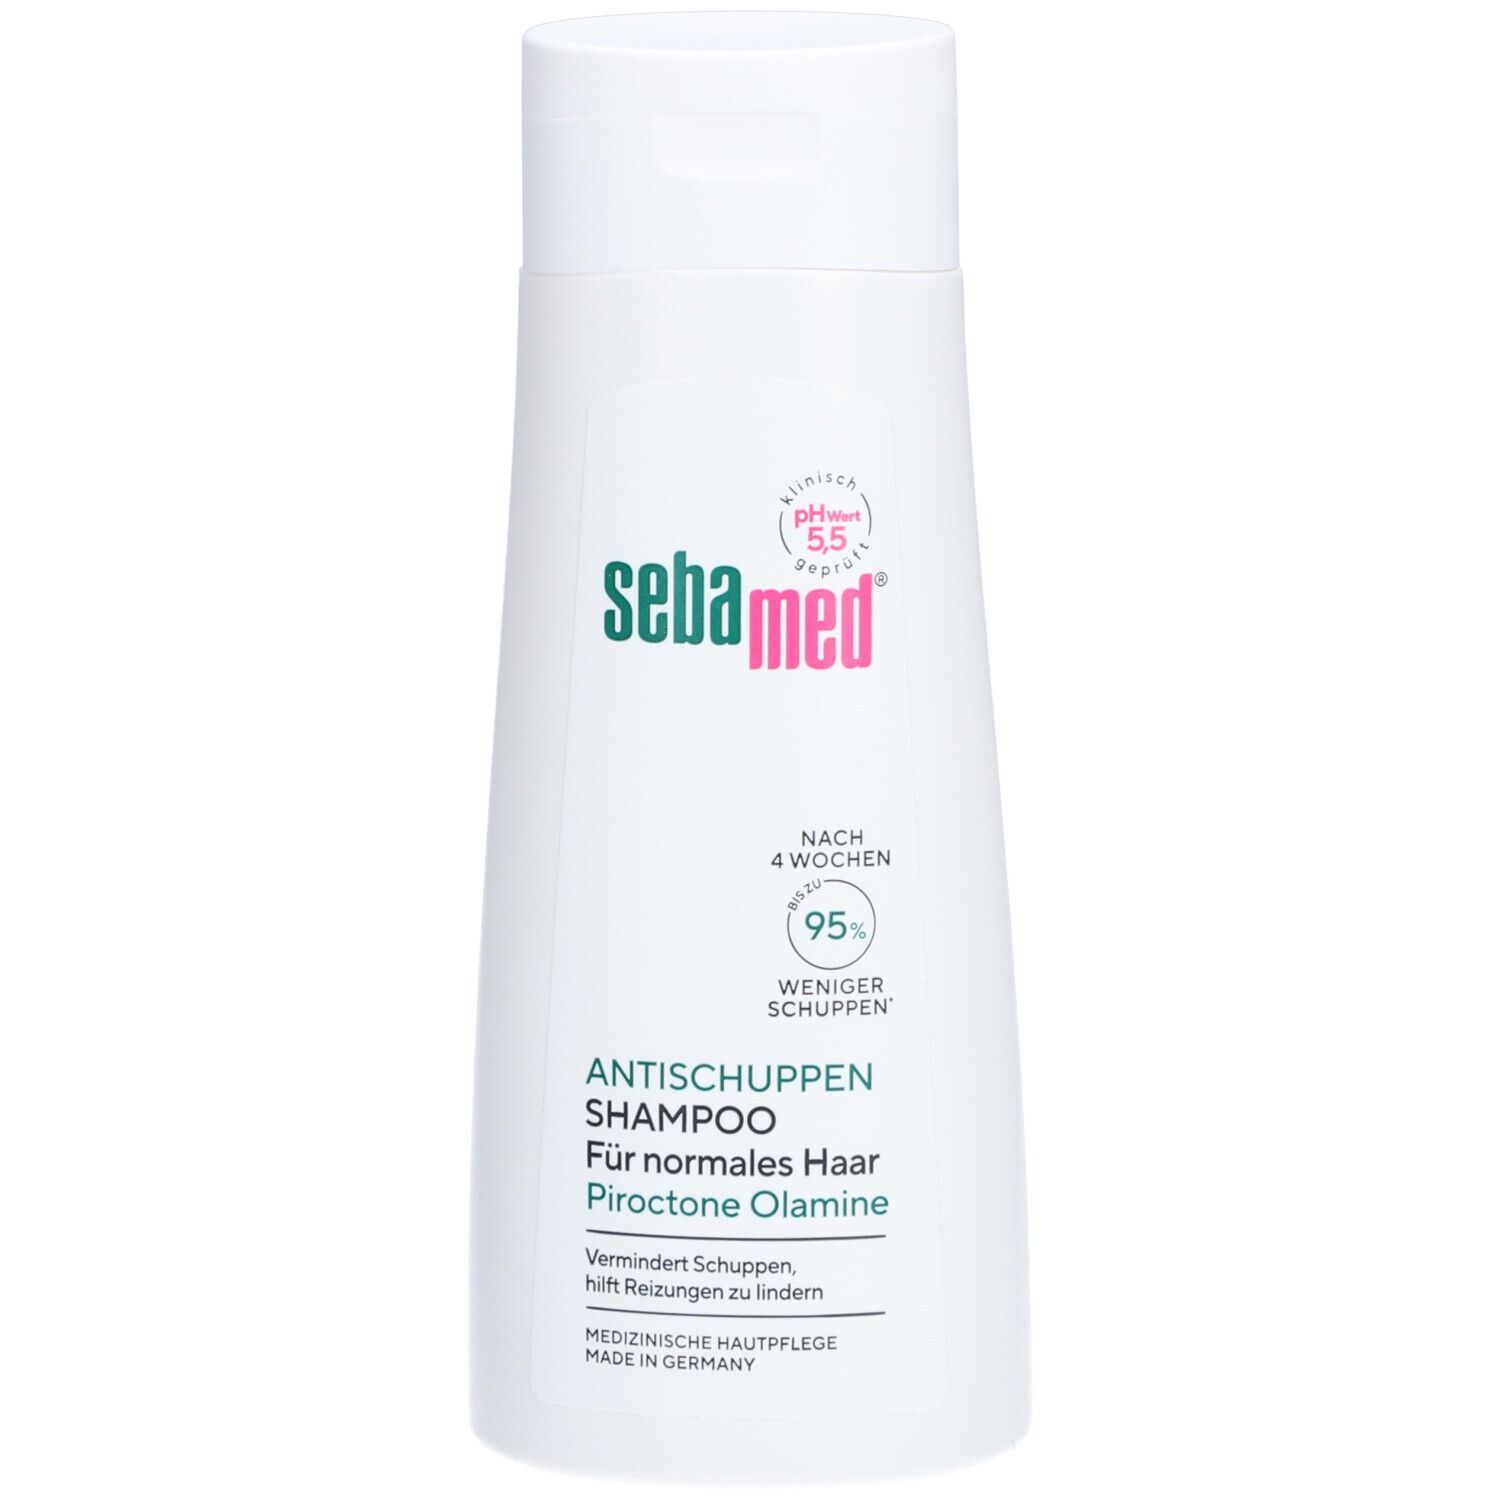 sebamed® Antischuppen Shampoo